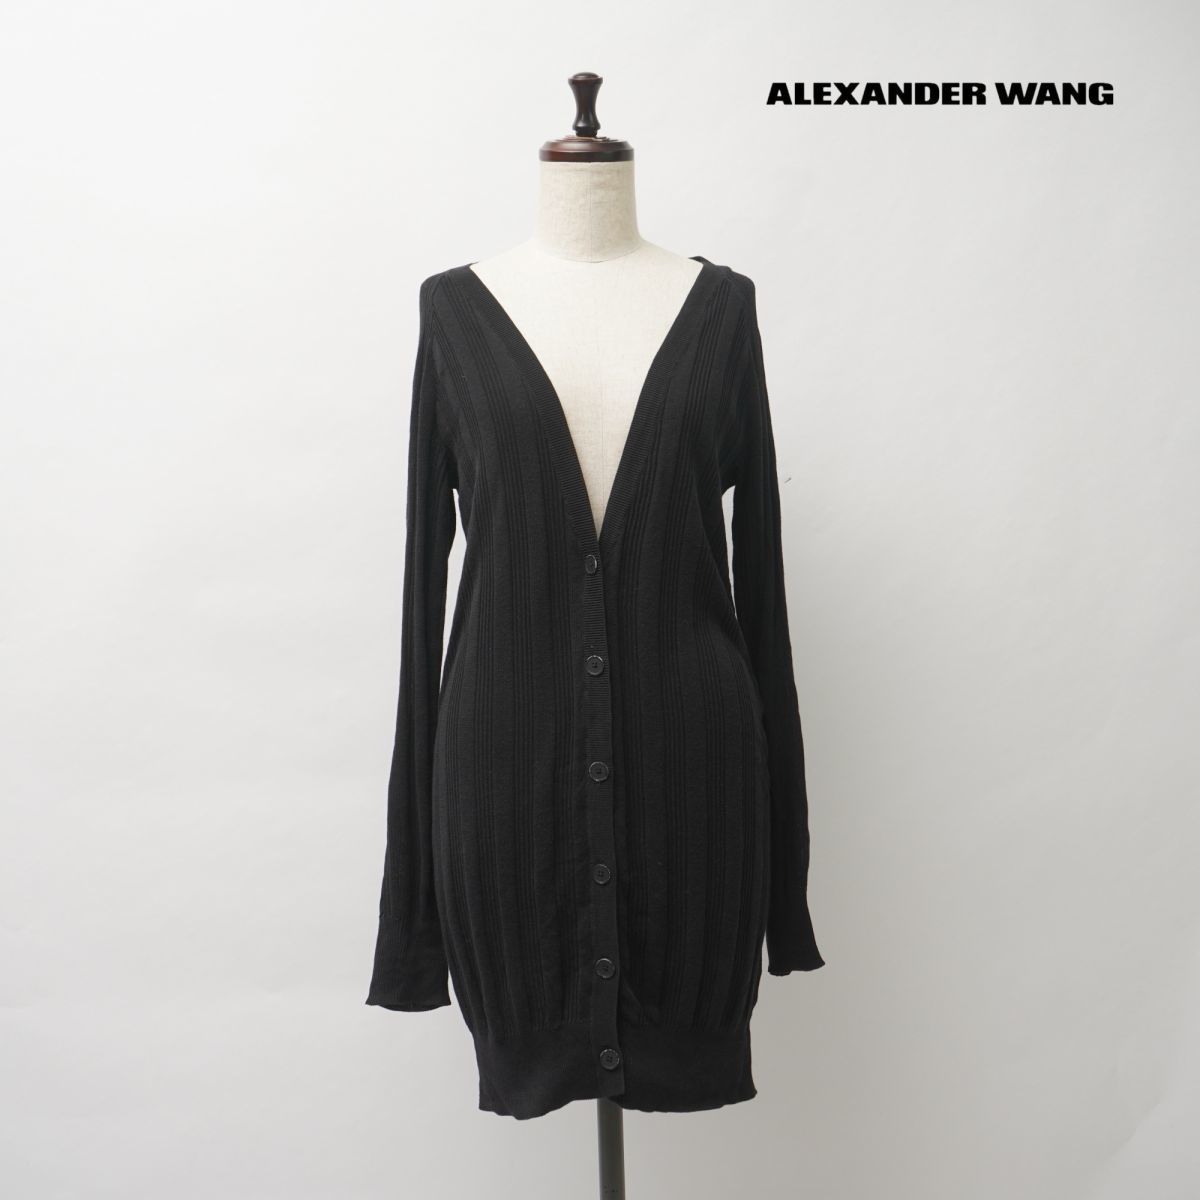 alexanderwang アレキサンダーワング ロングニットカーディガン ストレッチ素材 トップス レディース 黒 ブラック サイズxs*GC584のサムネイル